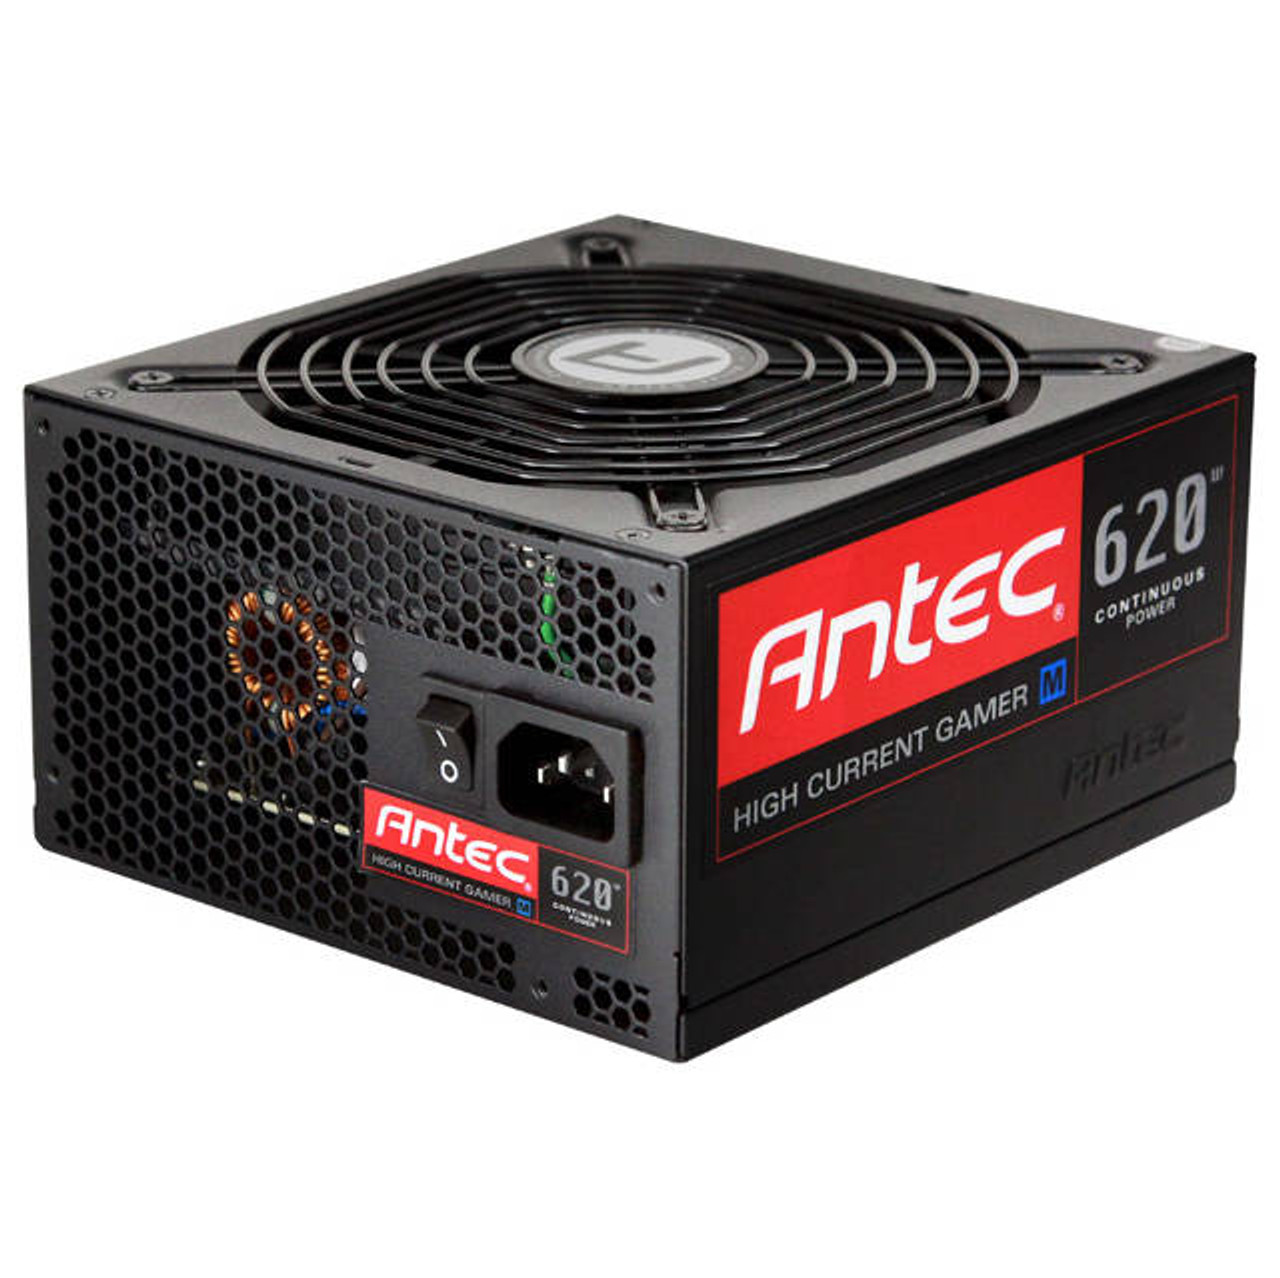 Antec High Current Gamer HCG-620M 620W 80Plus Bronze ATX12V v2.32/ EPS12V v2.92 Power Supply